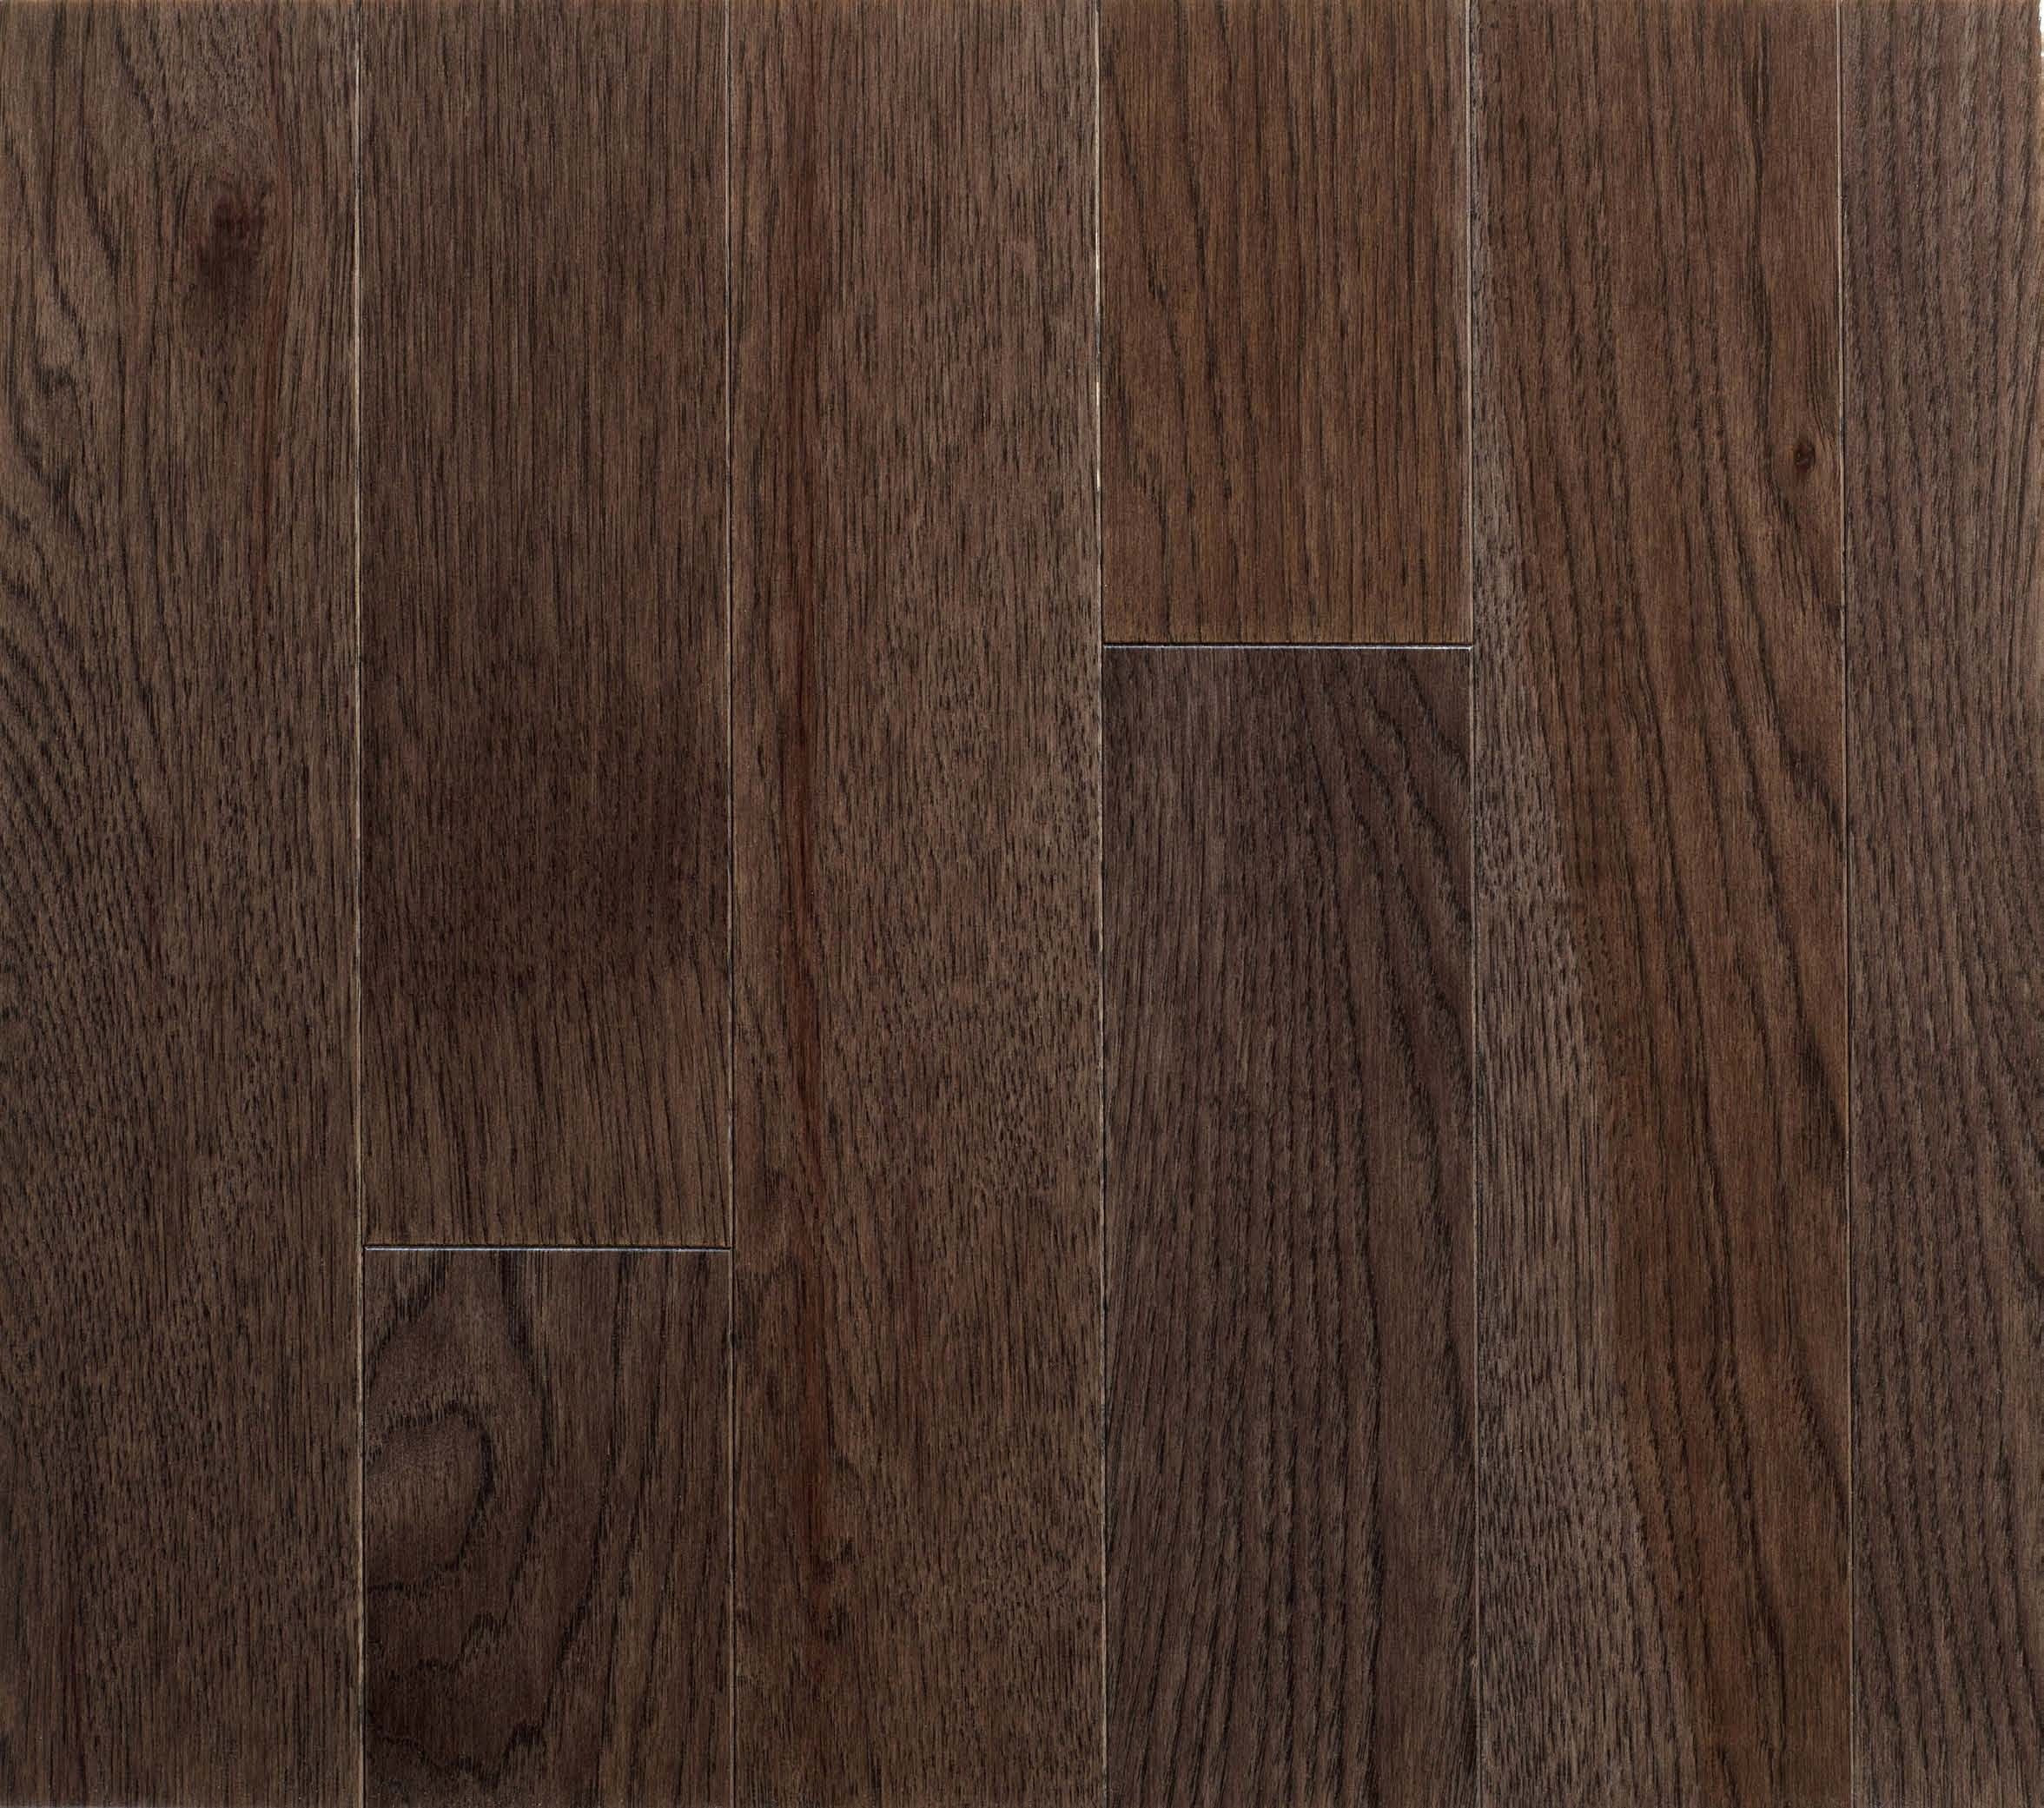 1 1 2 inch white oak hardwood flooring of hickory mesquite by vintage hardwood flooring hardwood within hickory mesquite by vintage hardwood flooring hardwood hardwoodflooring hickory pecan